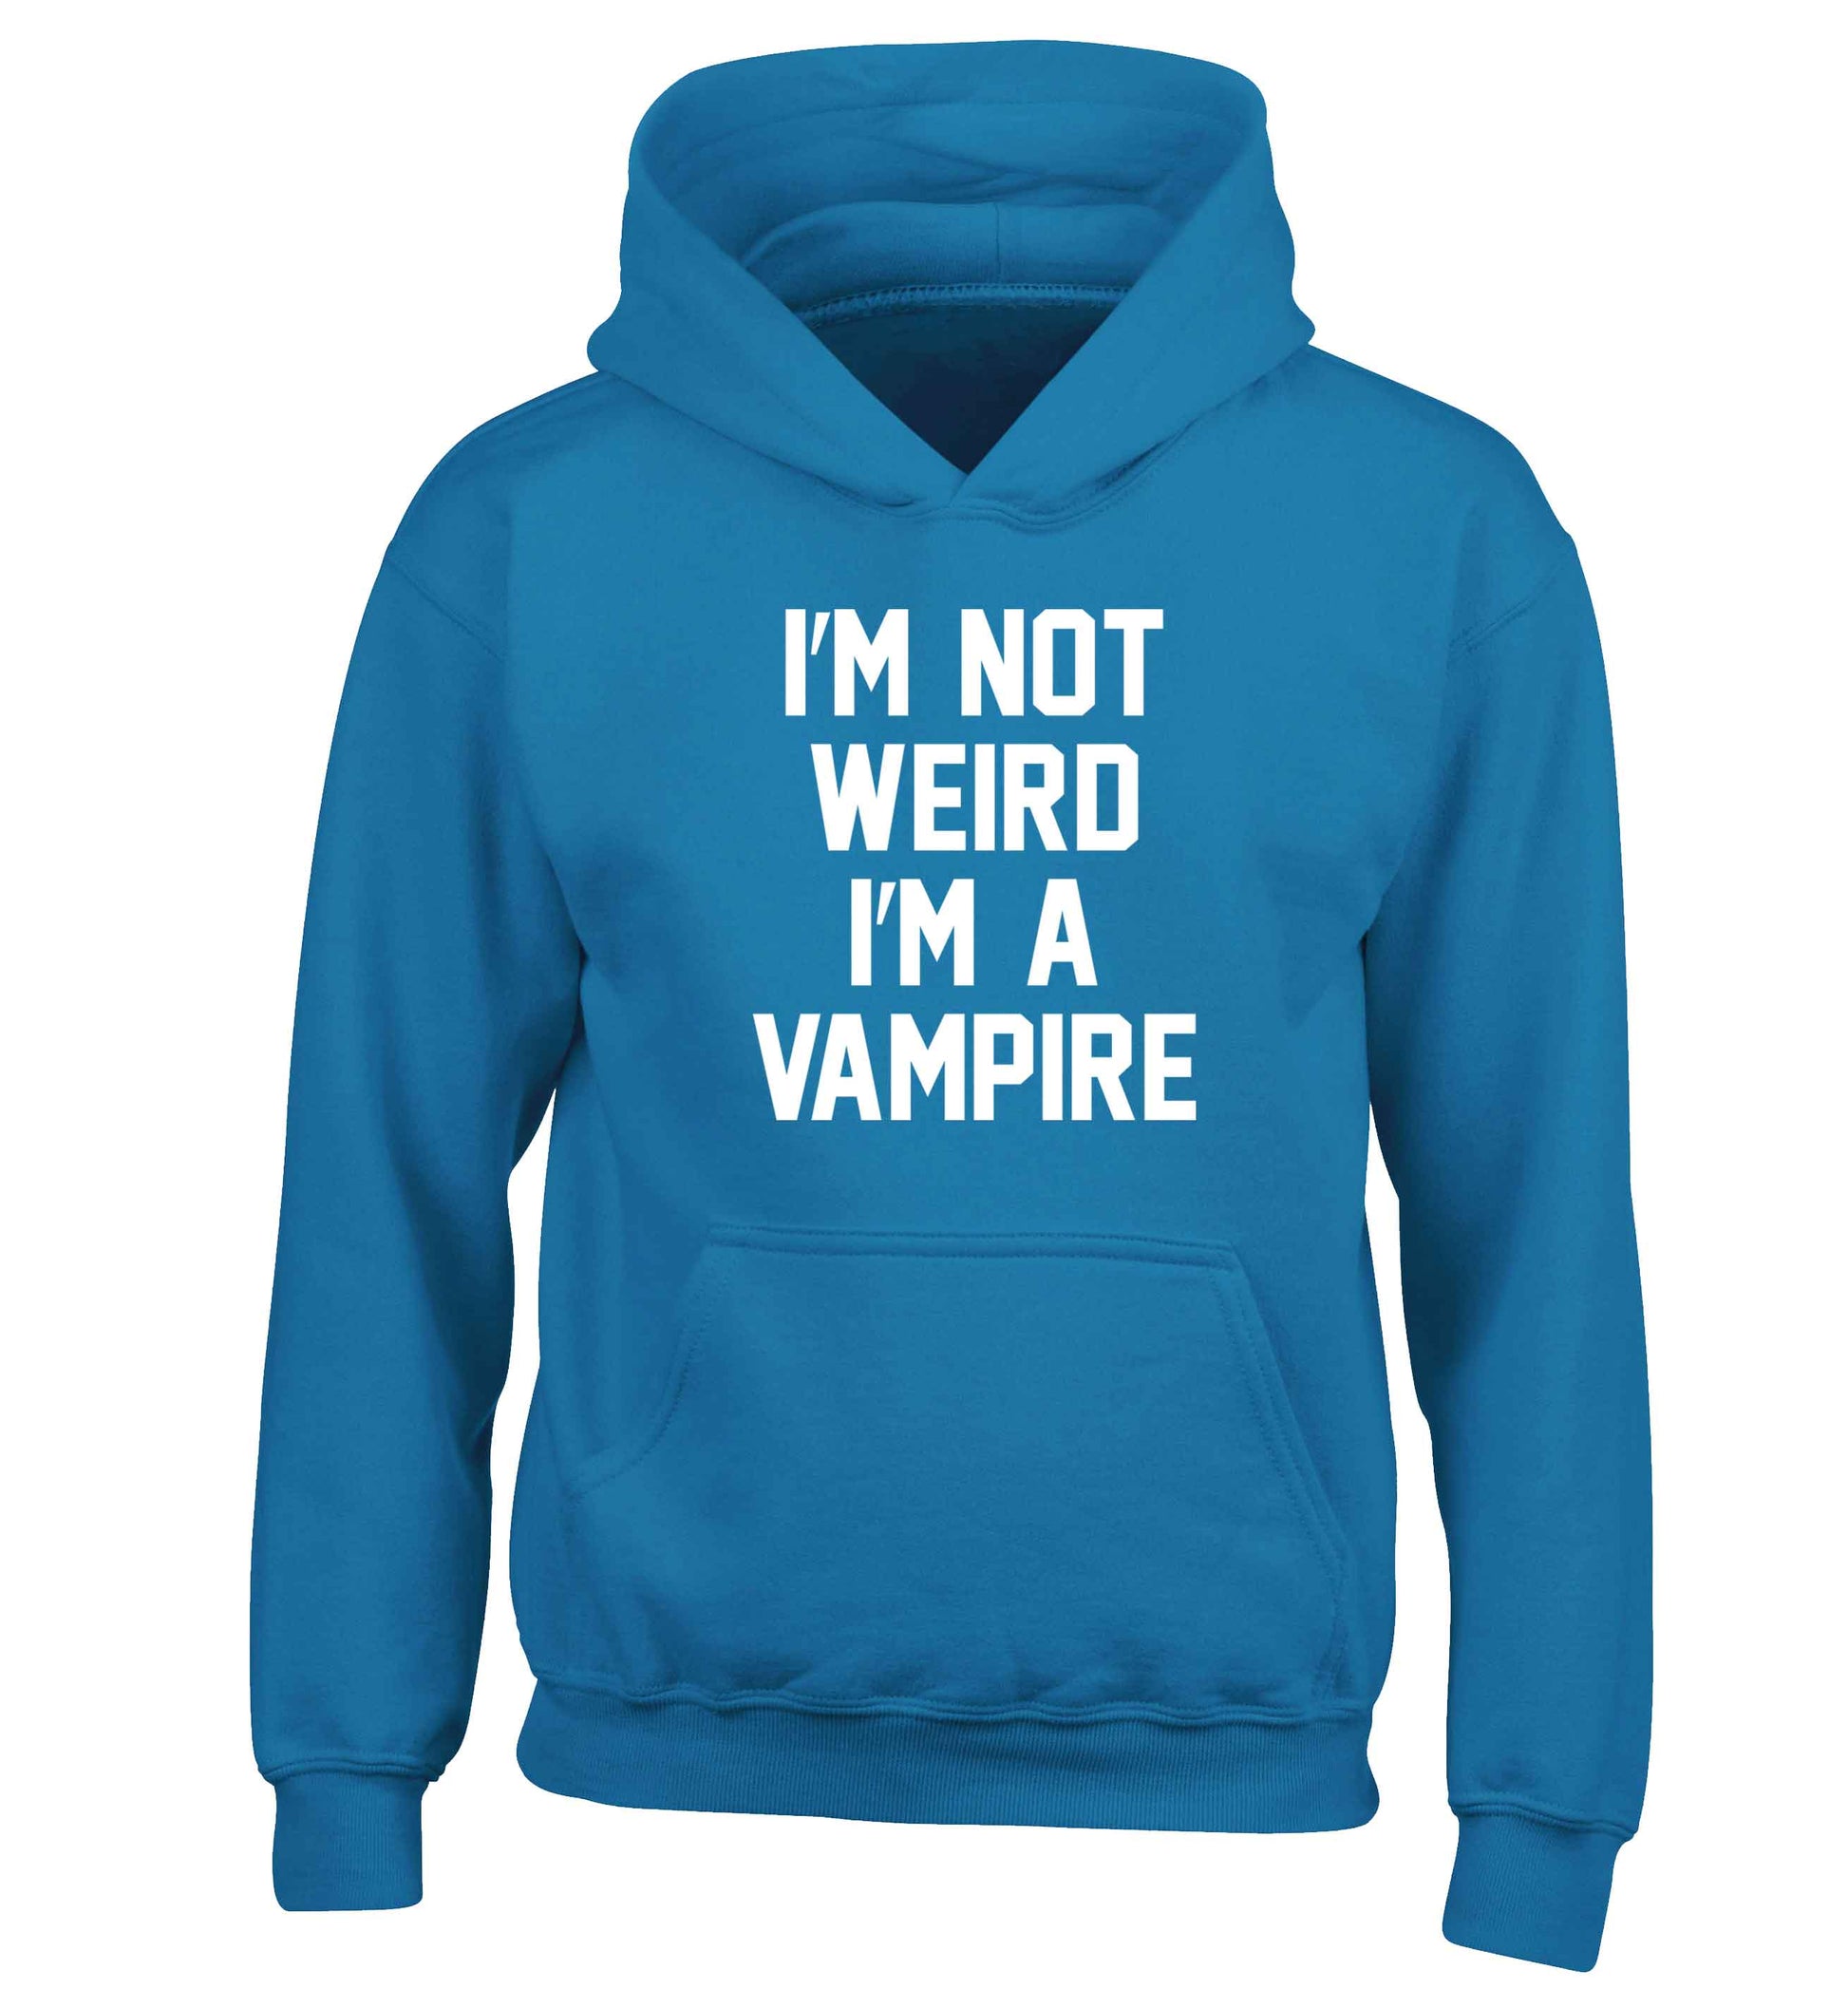 I'm not weird I'm a vampire children's blue hoodie 12-13 Years